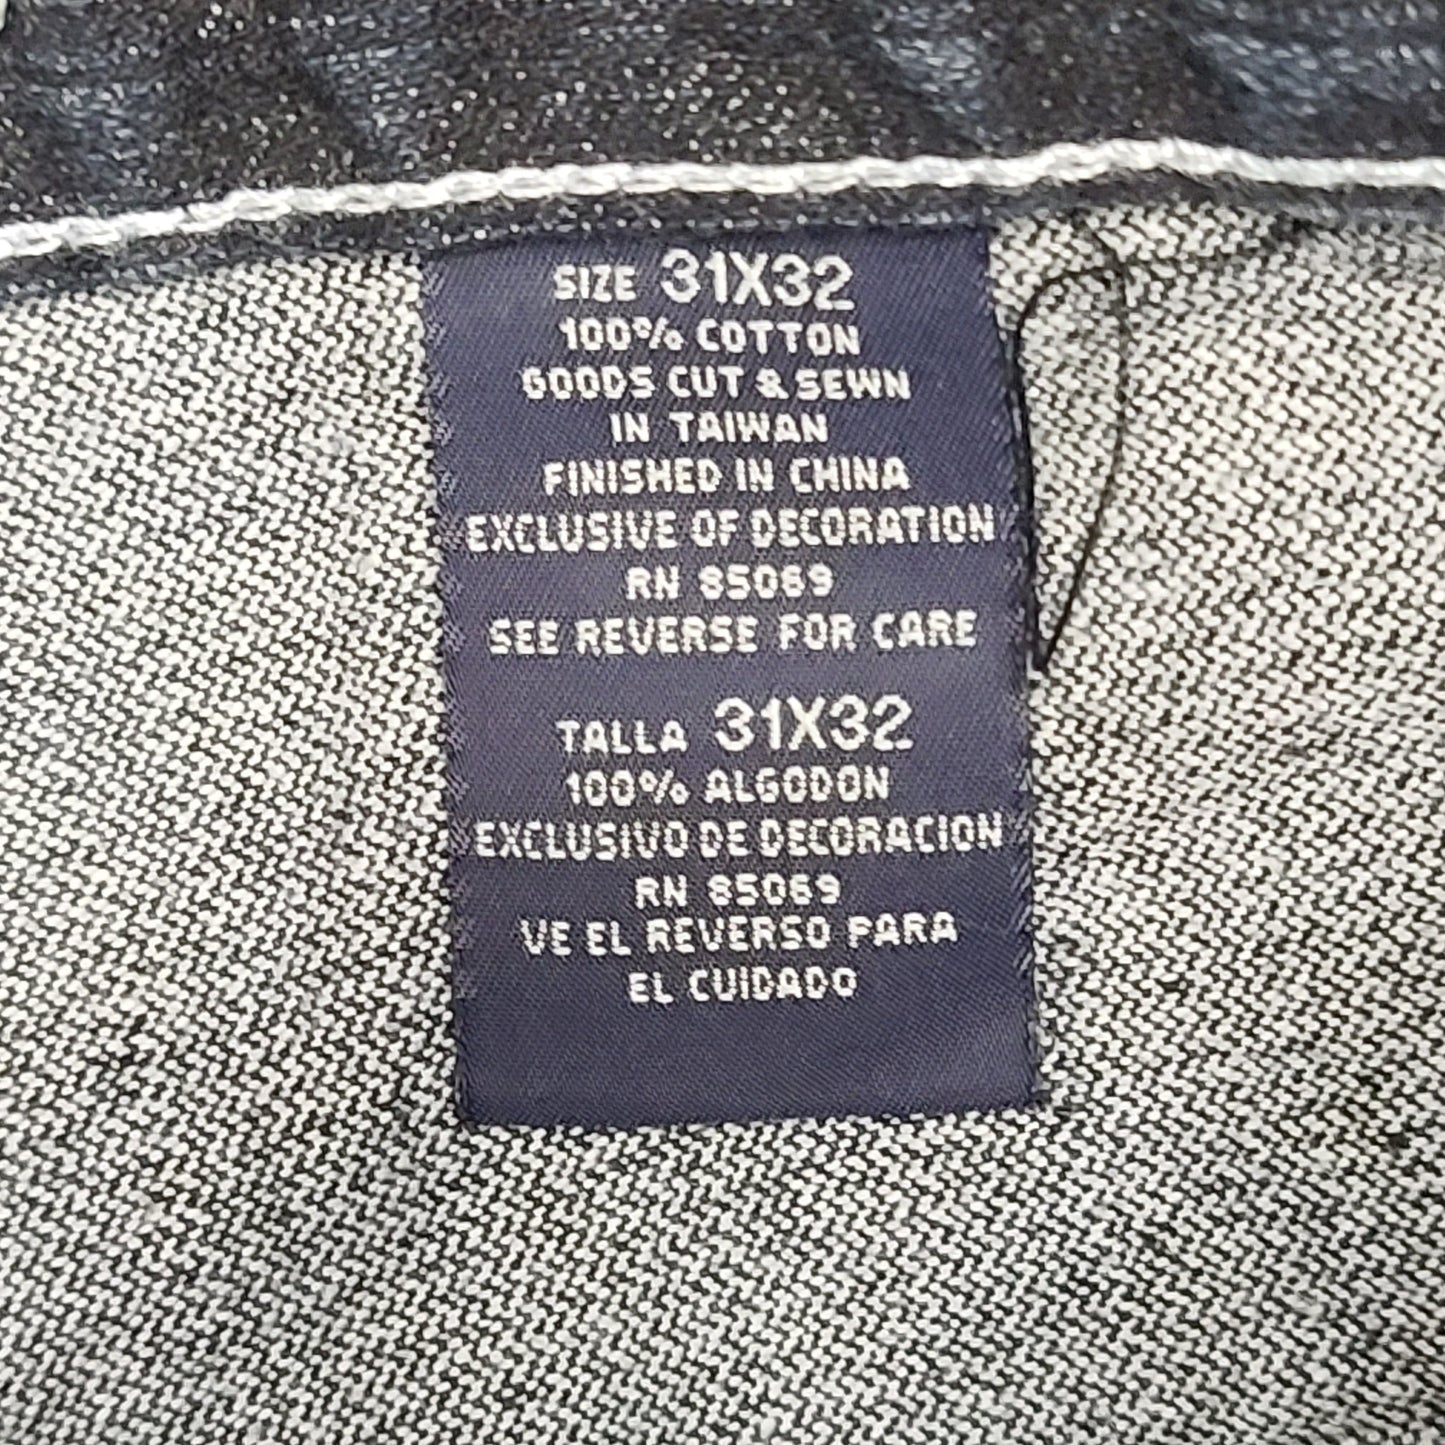 Vintage Y2K Embroidered Griffin Denim Paco Jeans